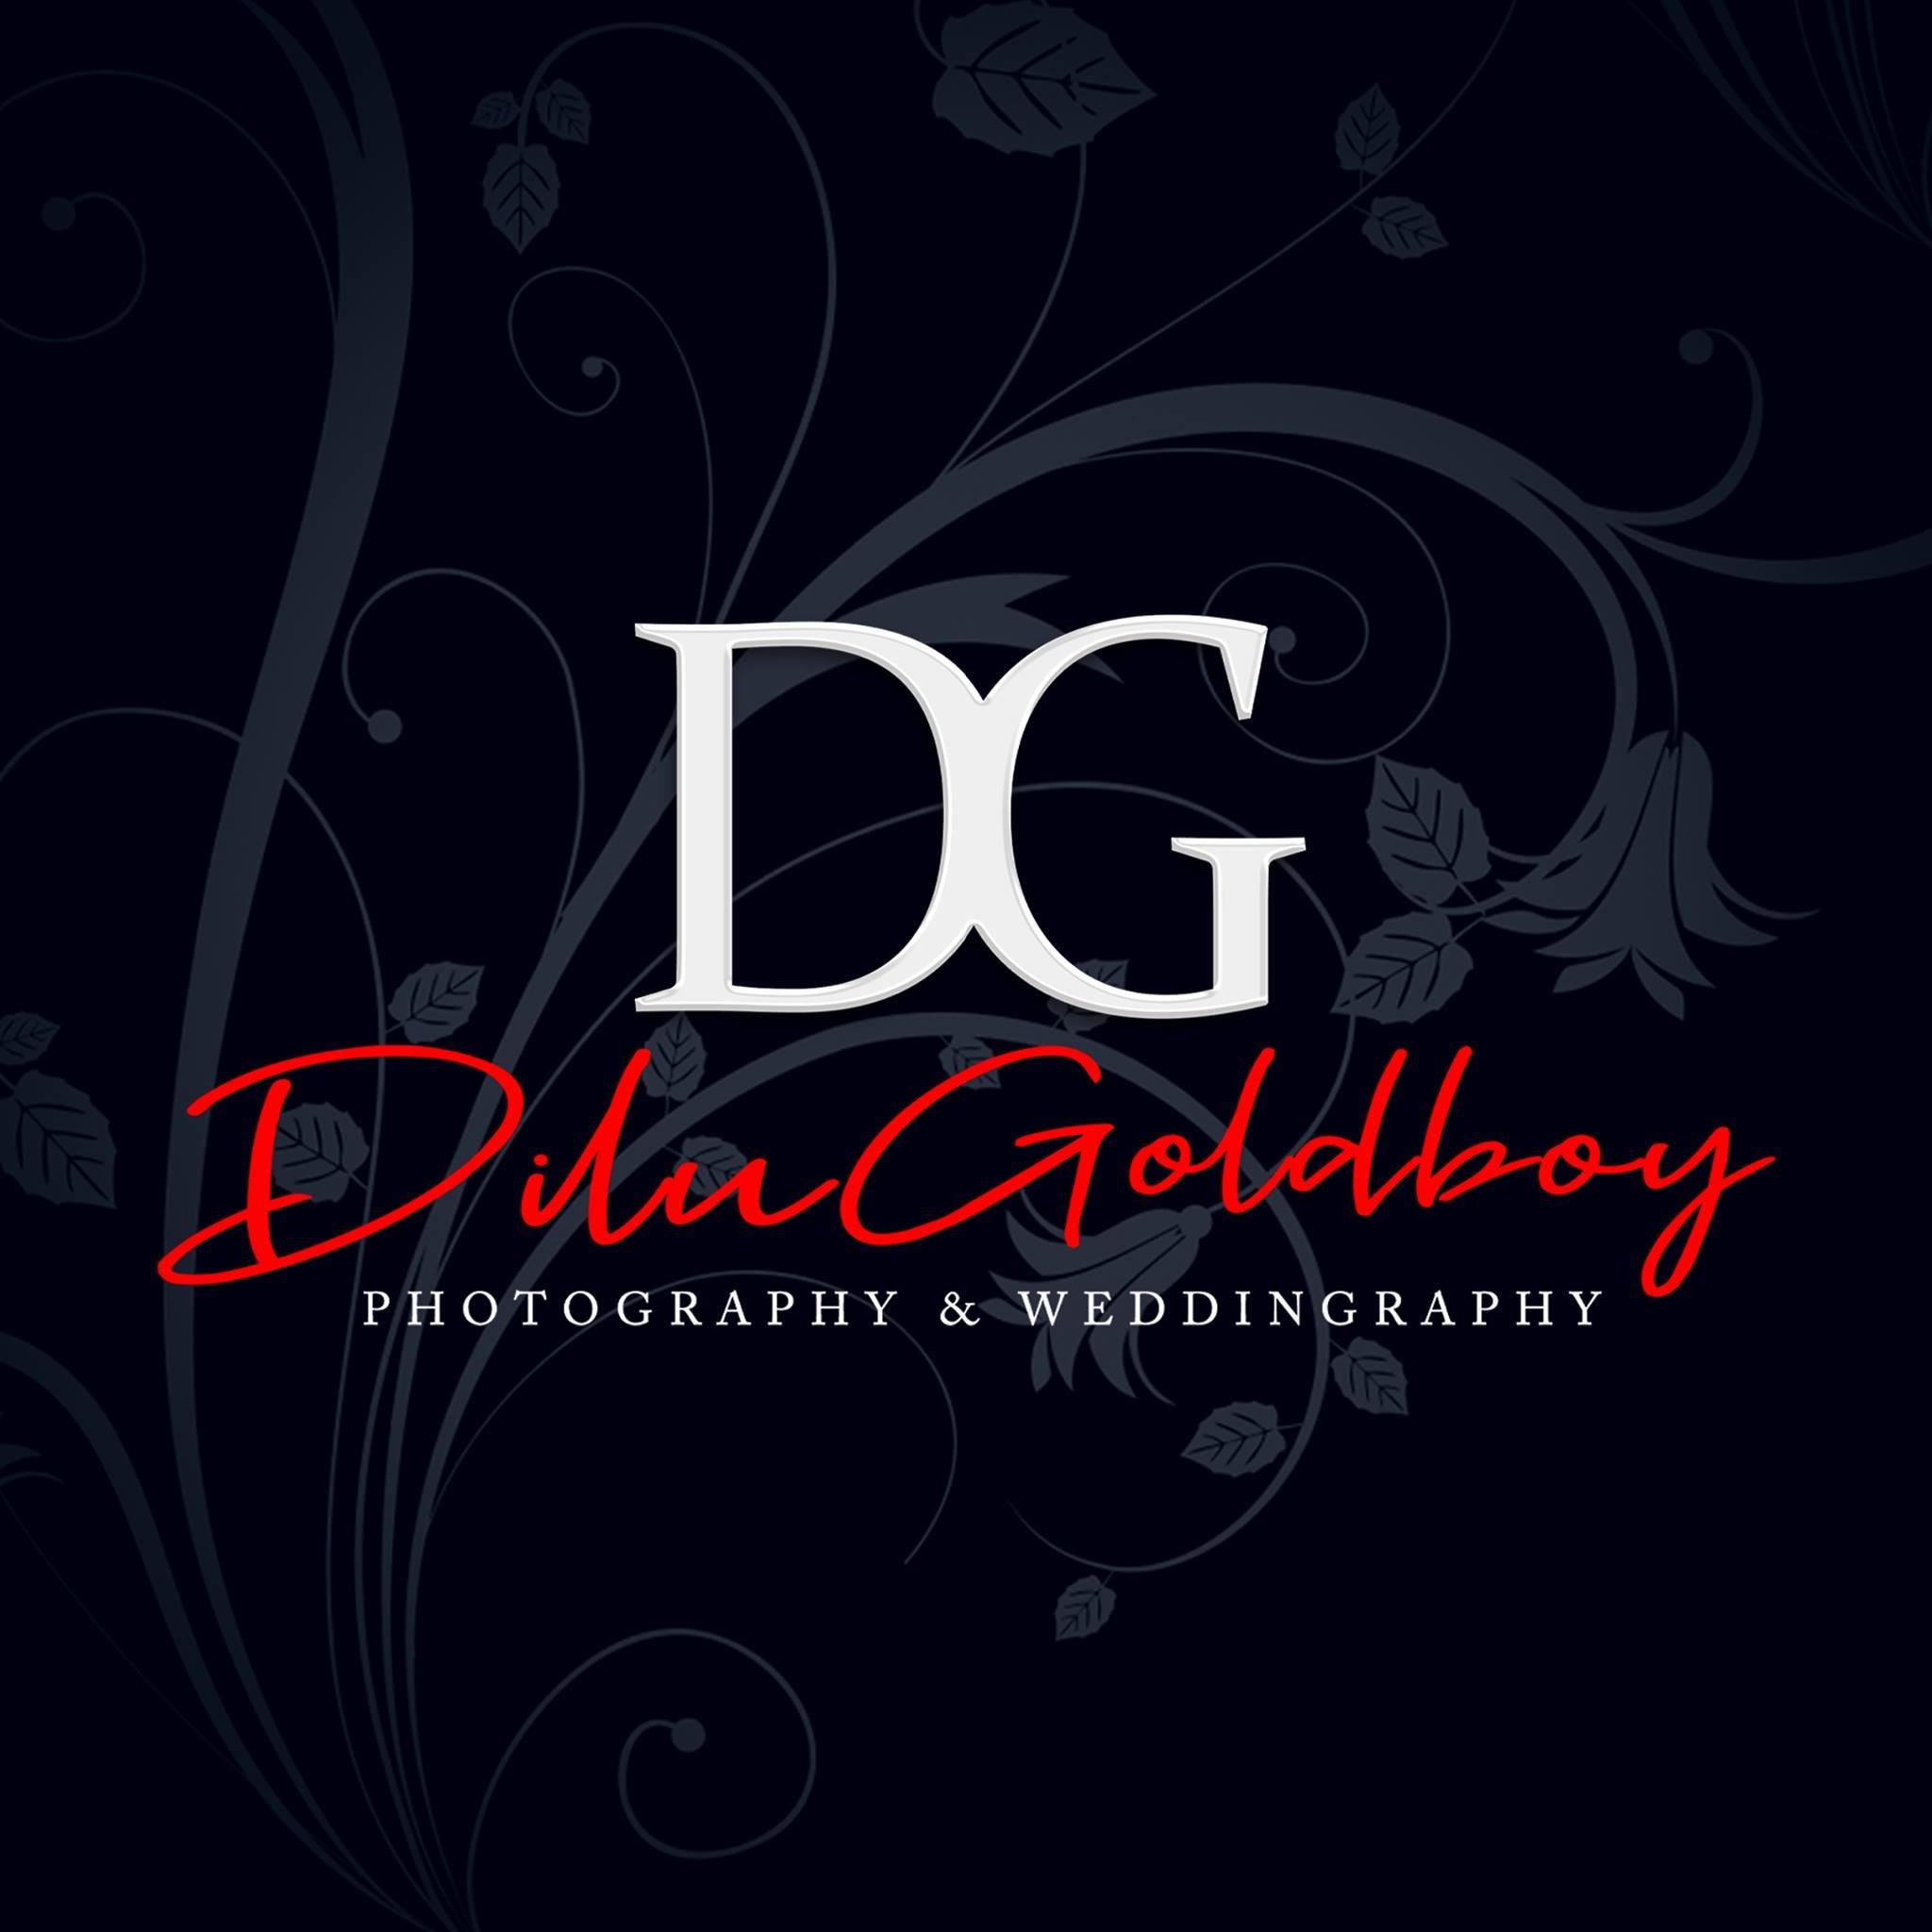 DG Photography & Weddingraphy Logo